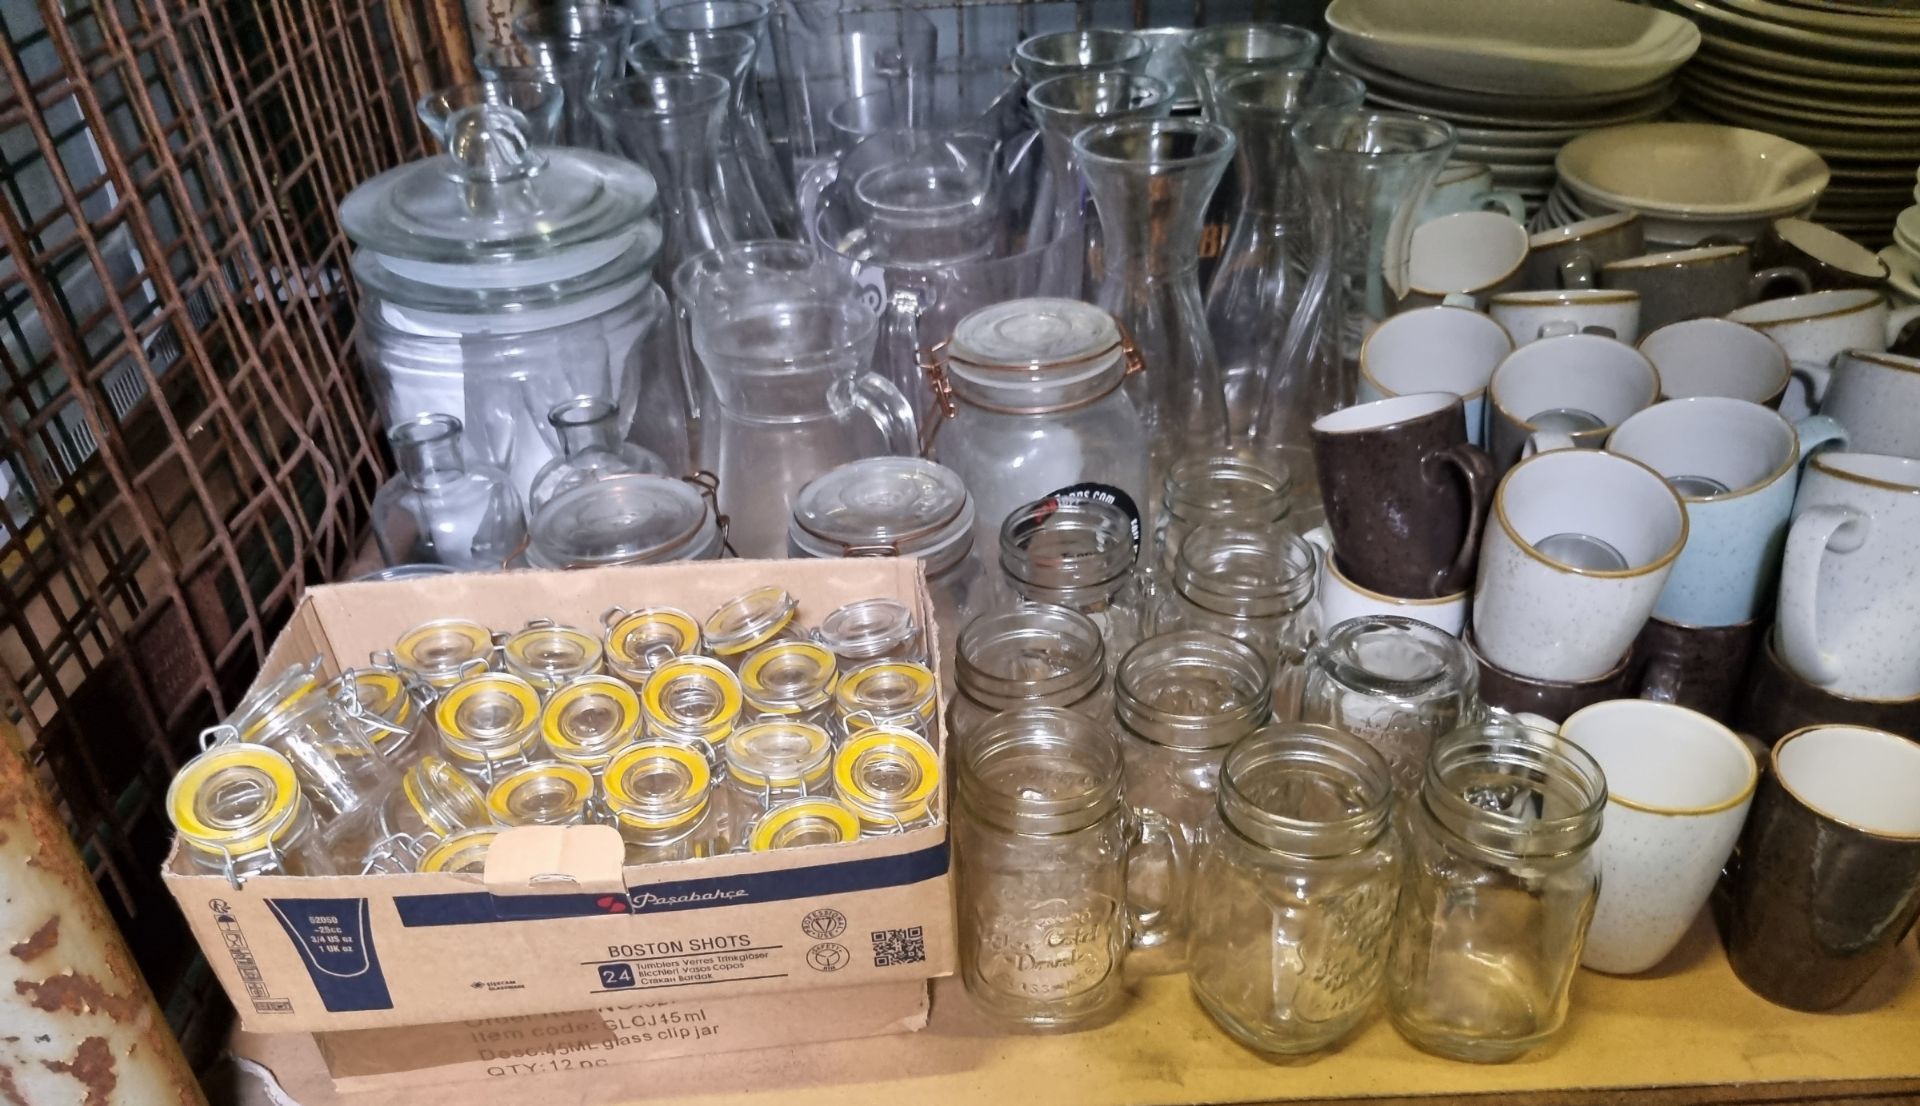 Tableware & glassware - plates, saucers, masonry glasses, jugs & shot glasses - Image 4 of 5